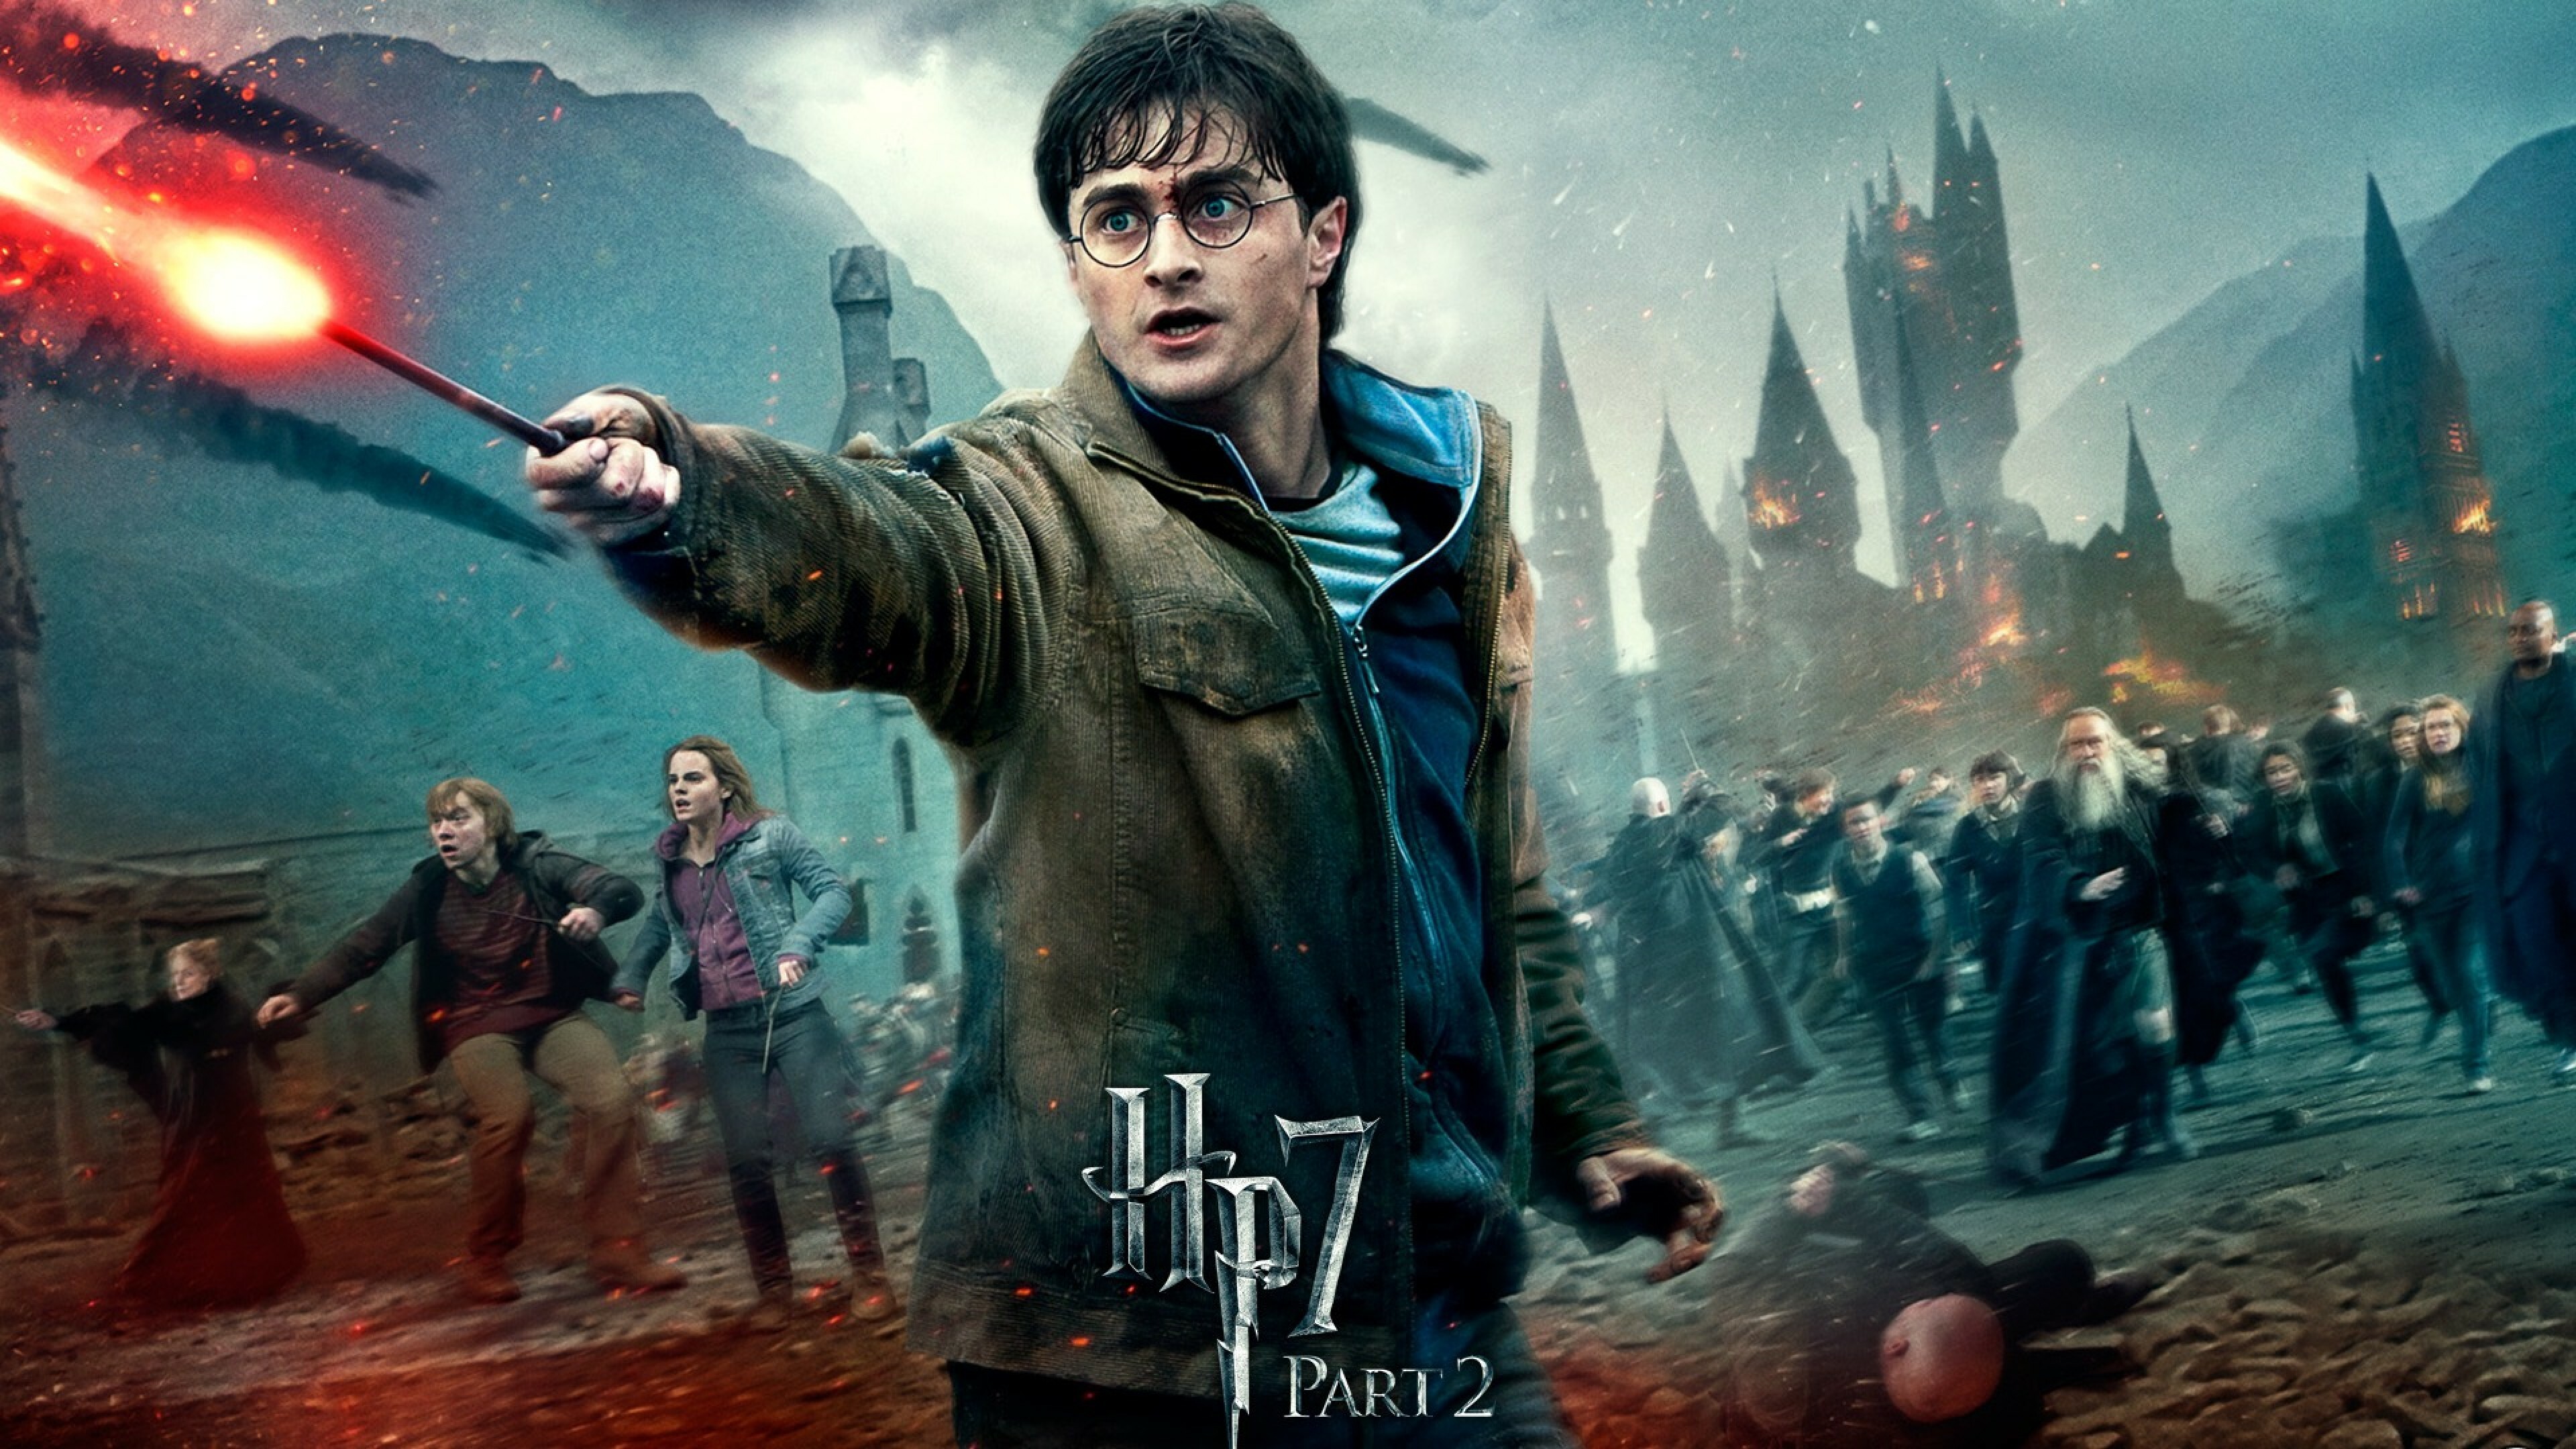 Harry Potter Wallpaper: 4K, HD, 1920x1080 Phone & Desktop Background